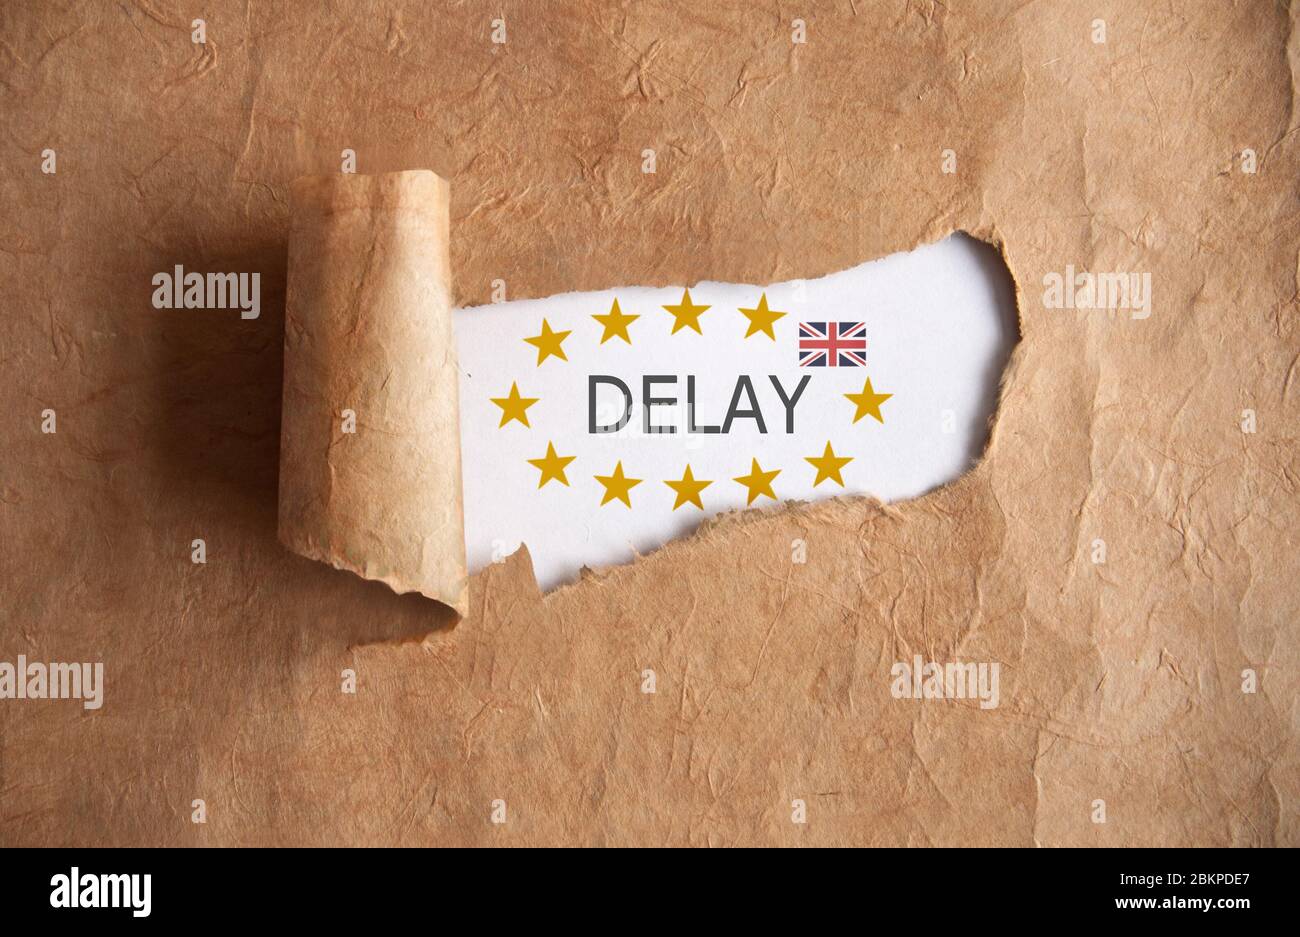 Brexit zerrissenes Stück Scroll enthüllt Verzögerung mit eu-Mitgliedsstaat Stars und united Kingdom Flagge Stockfoto